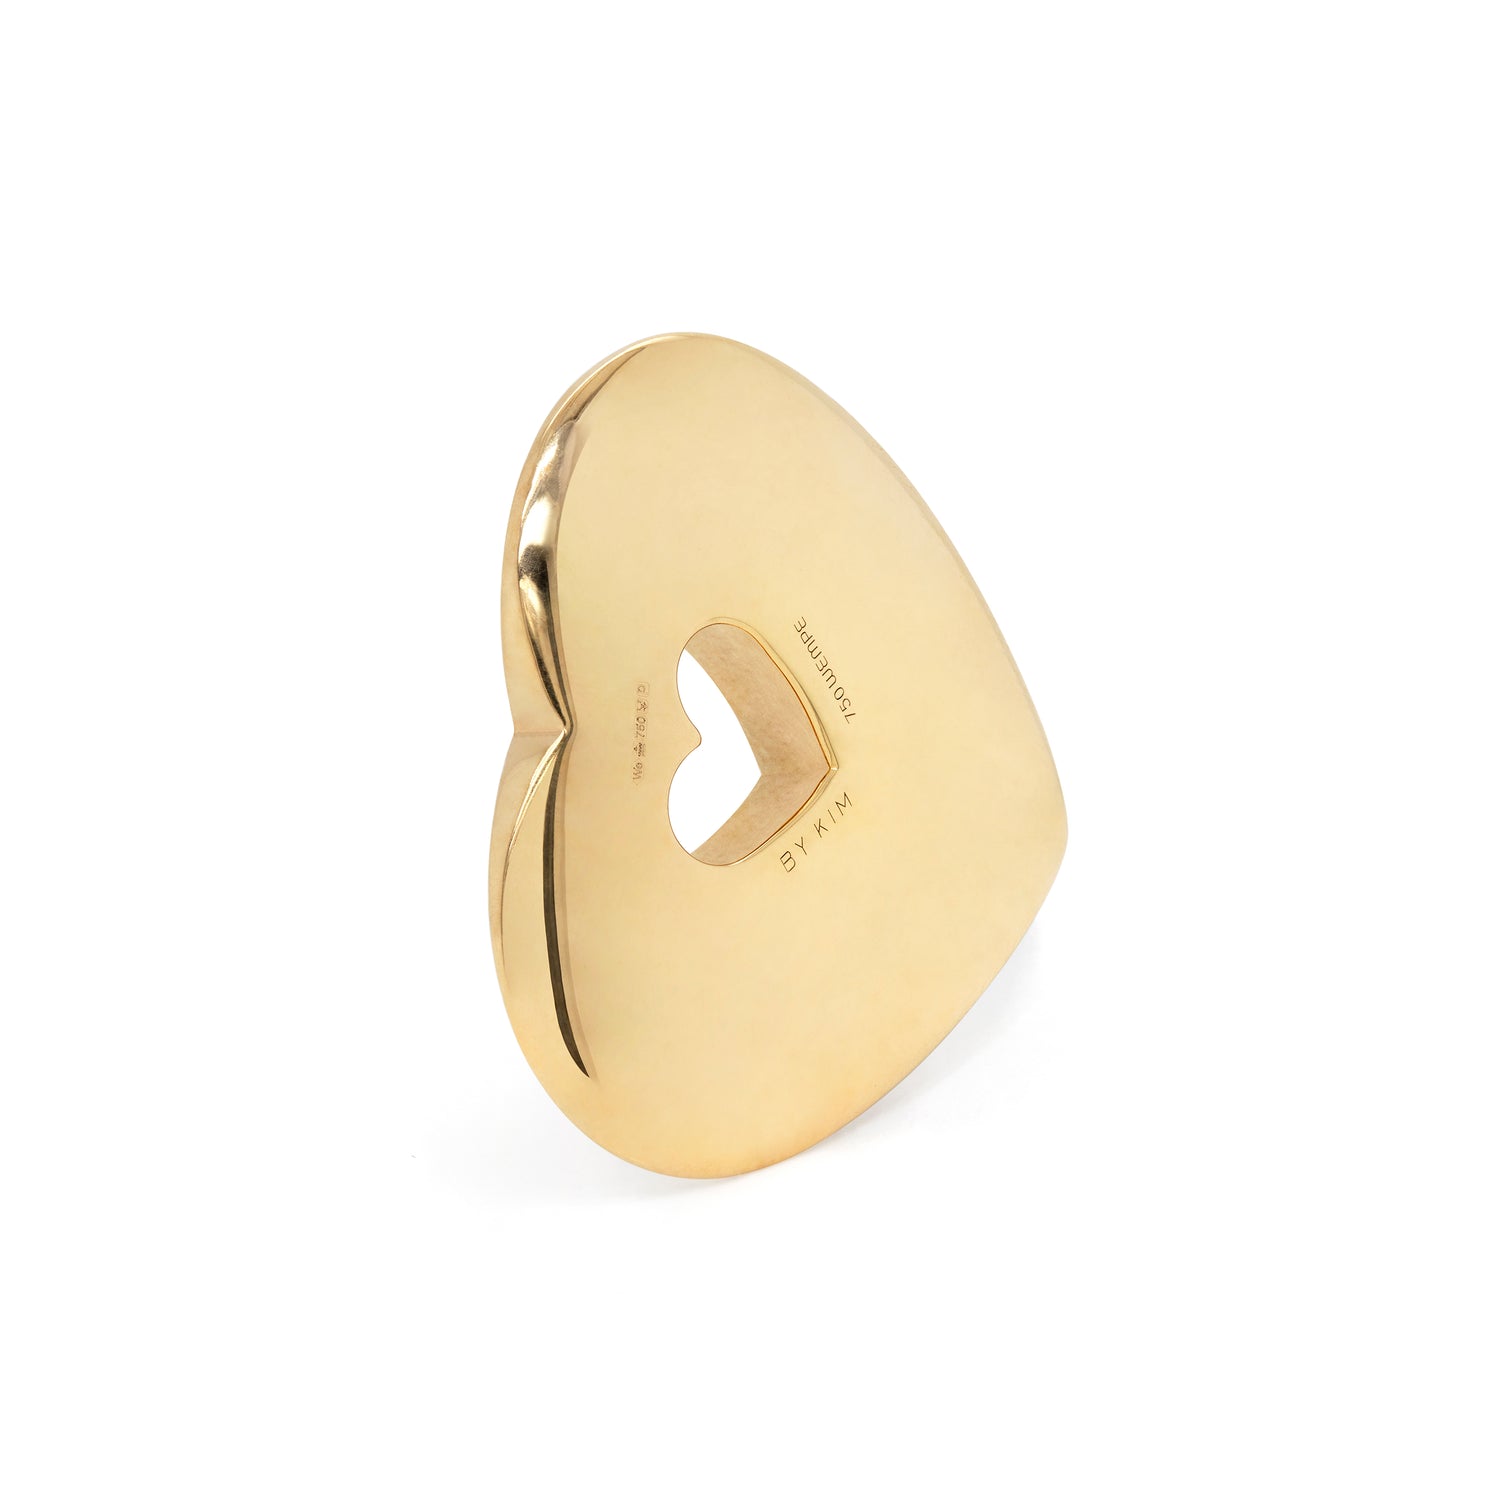 Wempe by Kim Amor Manet Diamond 18 Carat Yellow Gold Heart Pendant